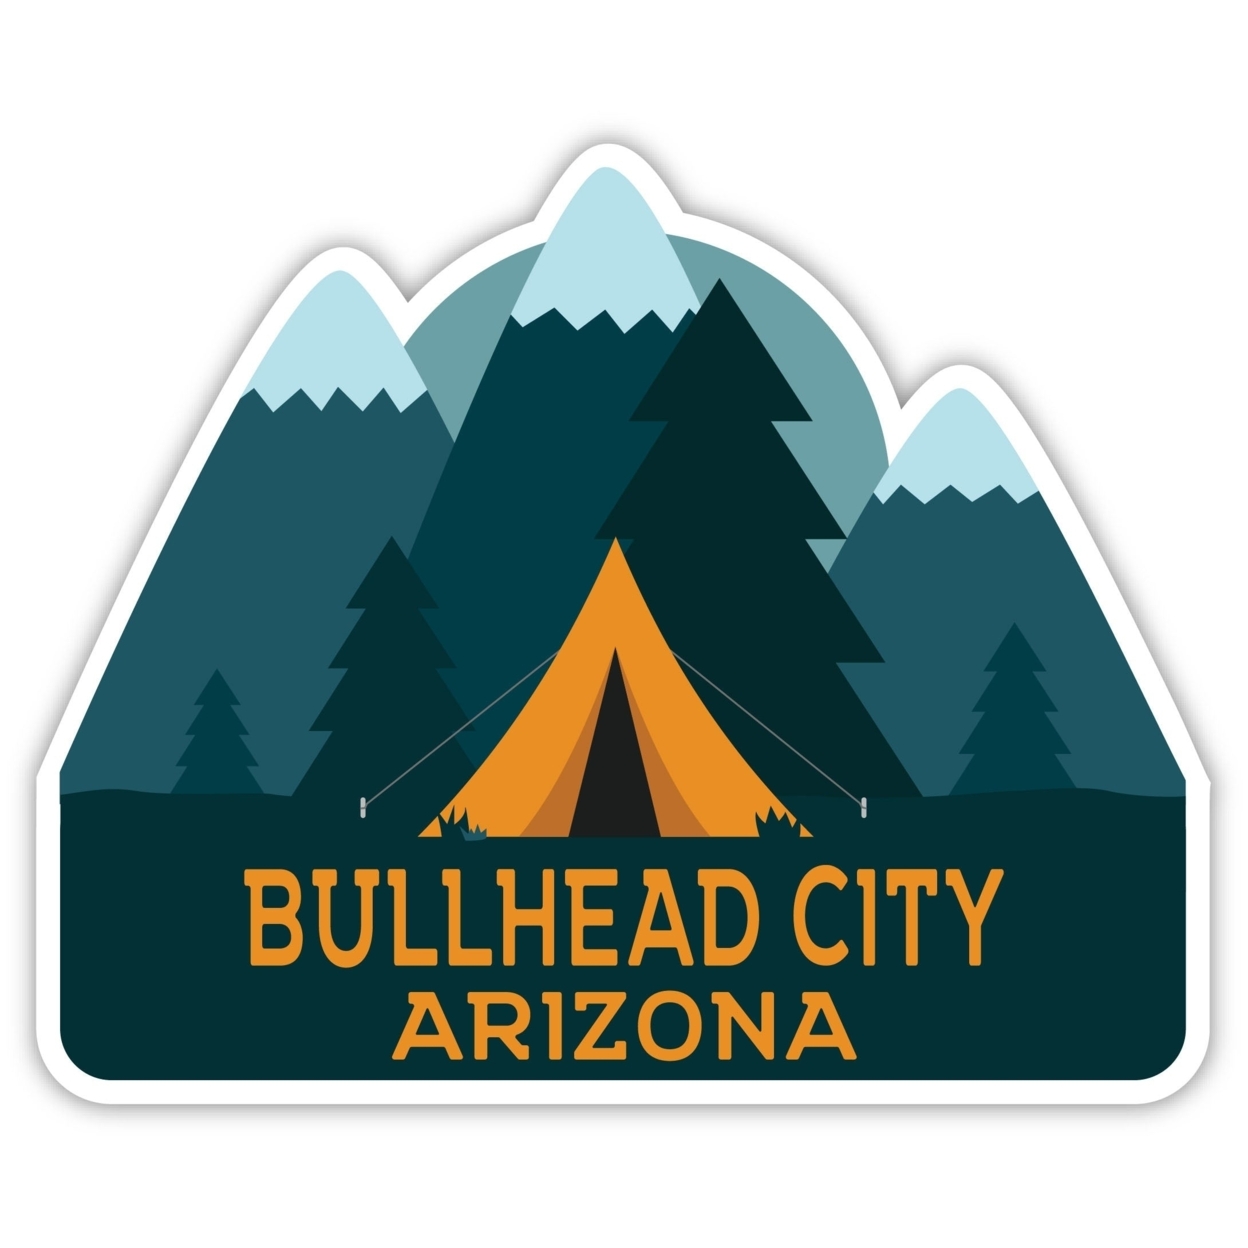 Bullhead City Arizona Souvenir Decorative Stickers (Choose Theme And Size) - 4-Pack, 12-Inch, Camp Life